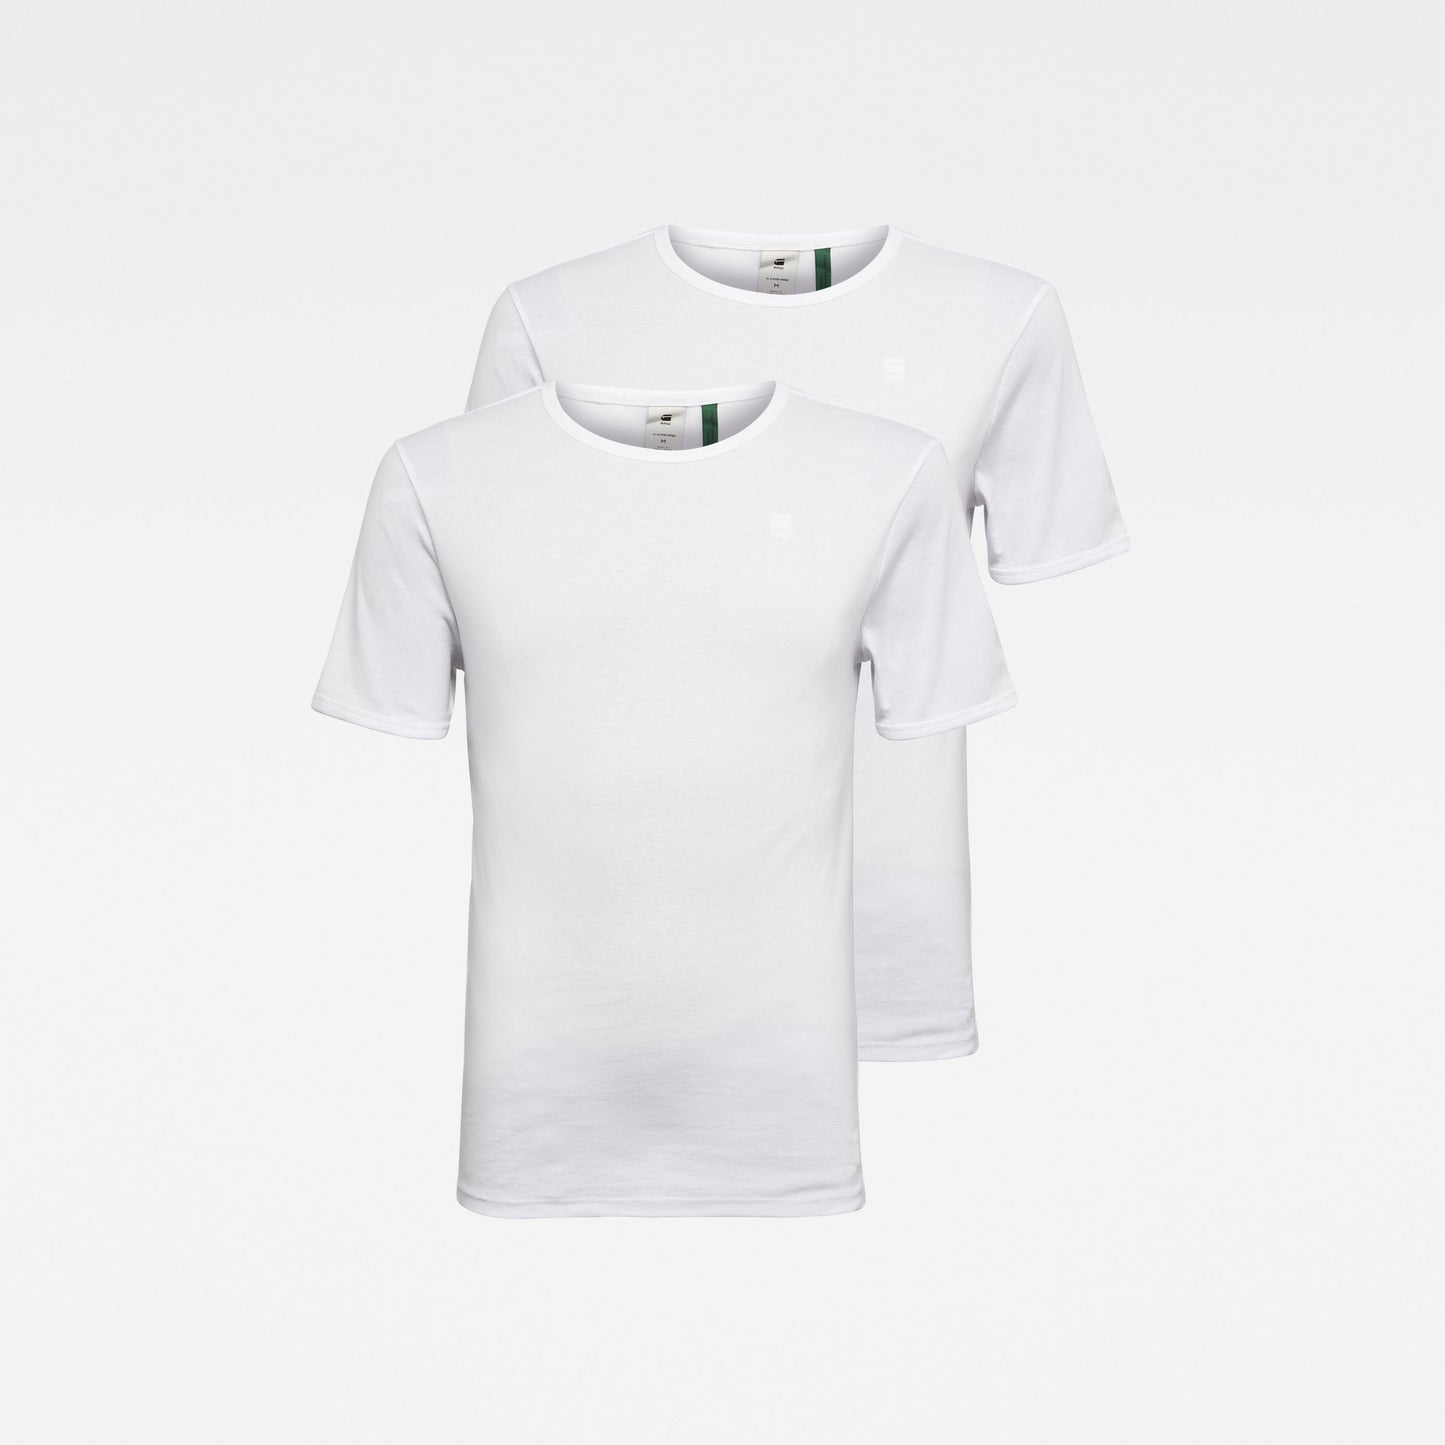 White Cotton Round Neck T-Shirts from G STAR Ireland at StylishGuy Menswear